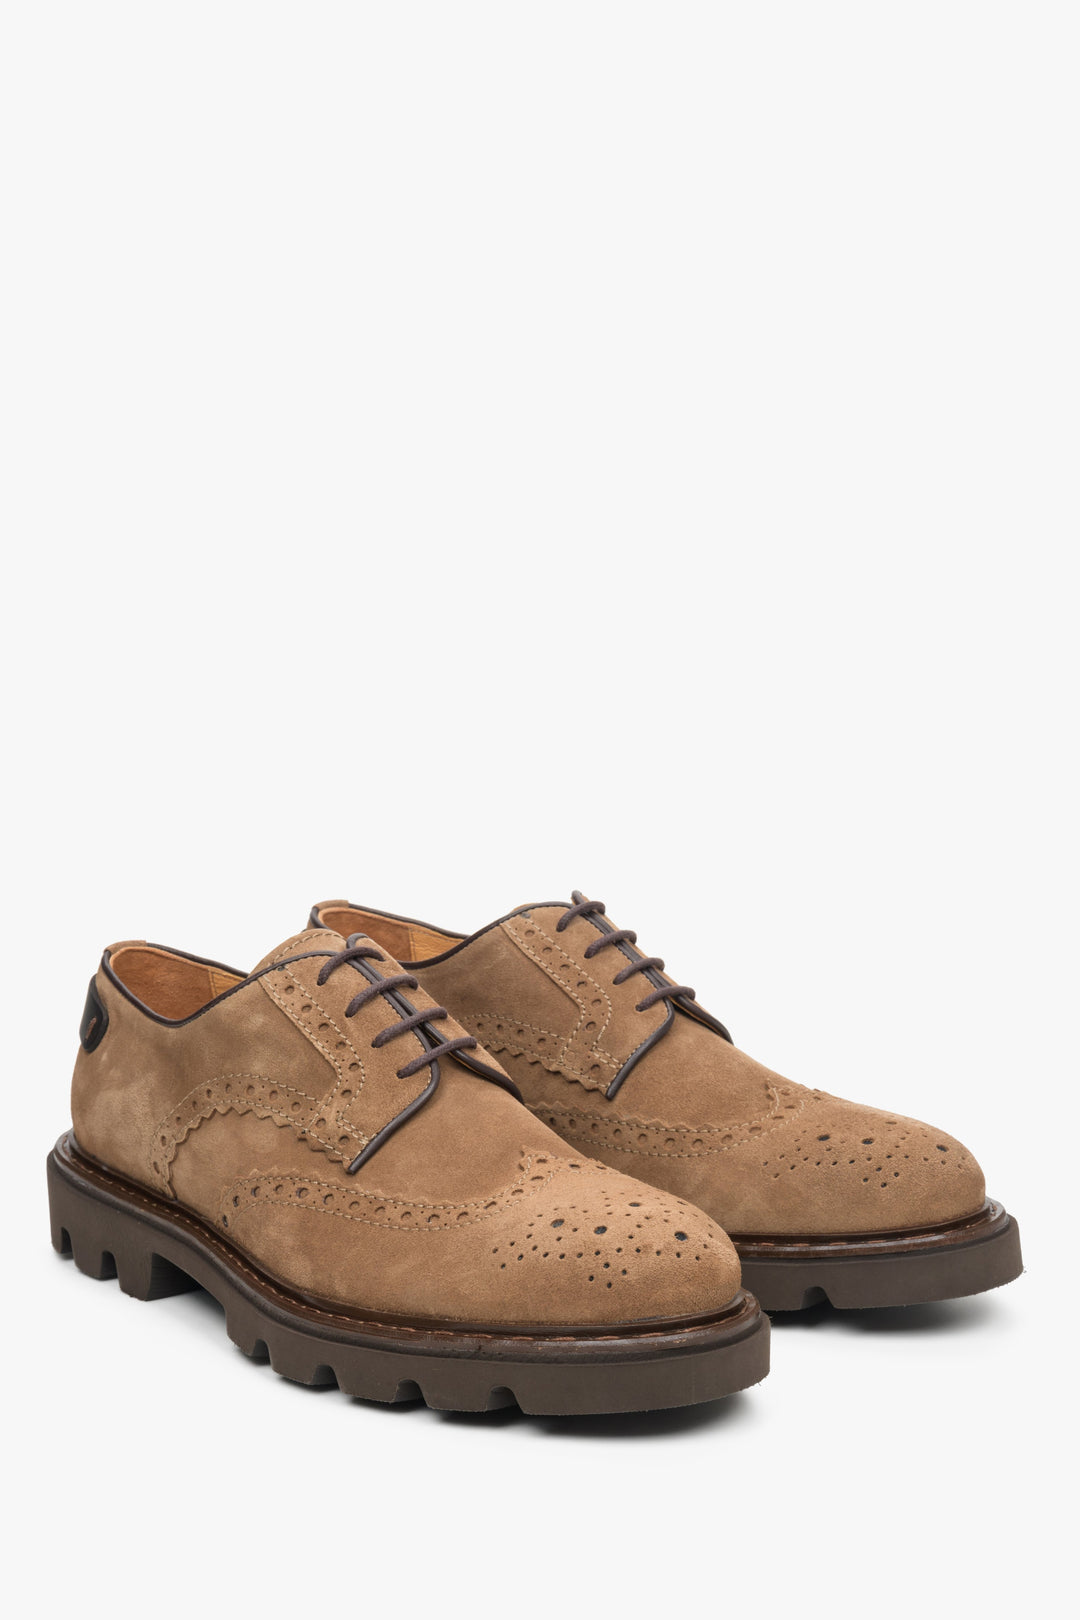 Men's light brown suede lace-up oxford shoes by Estro.